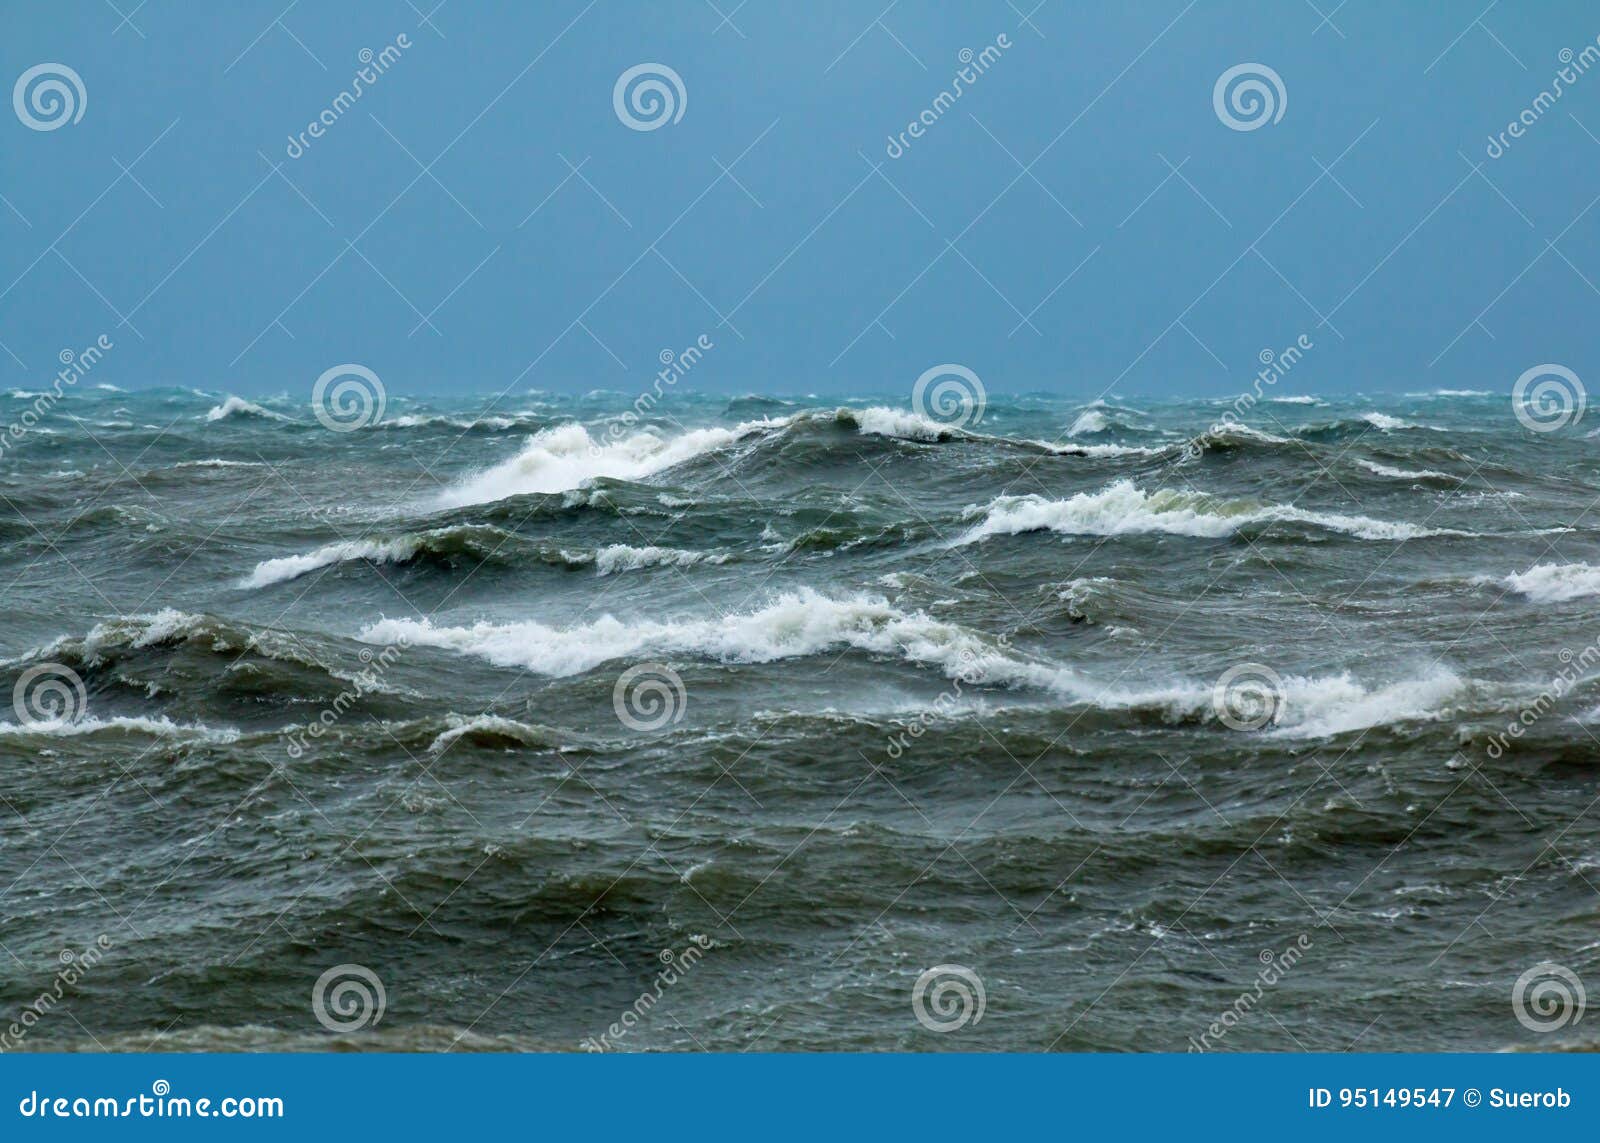 rough seas